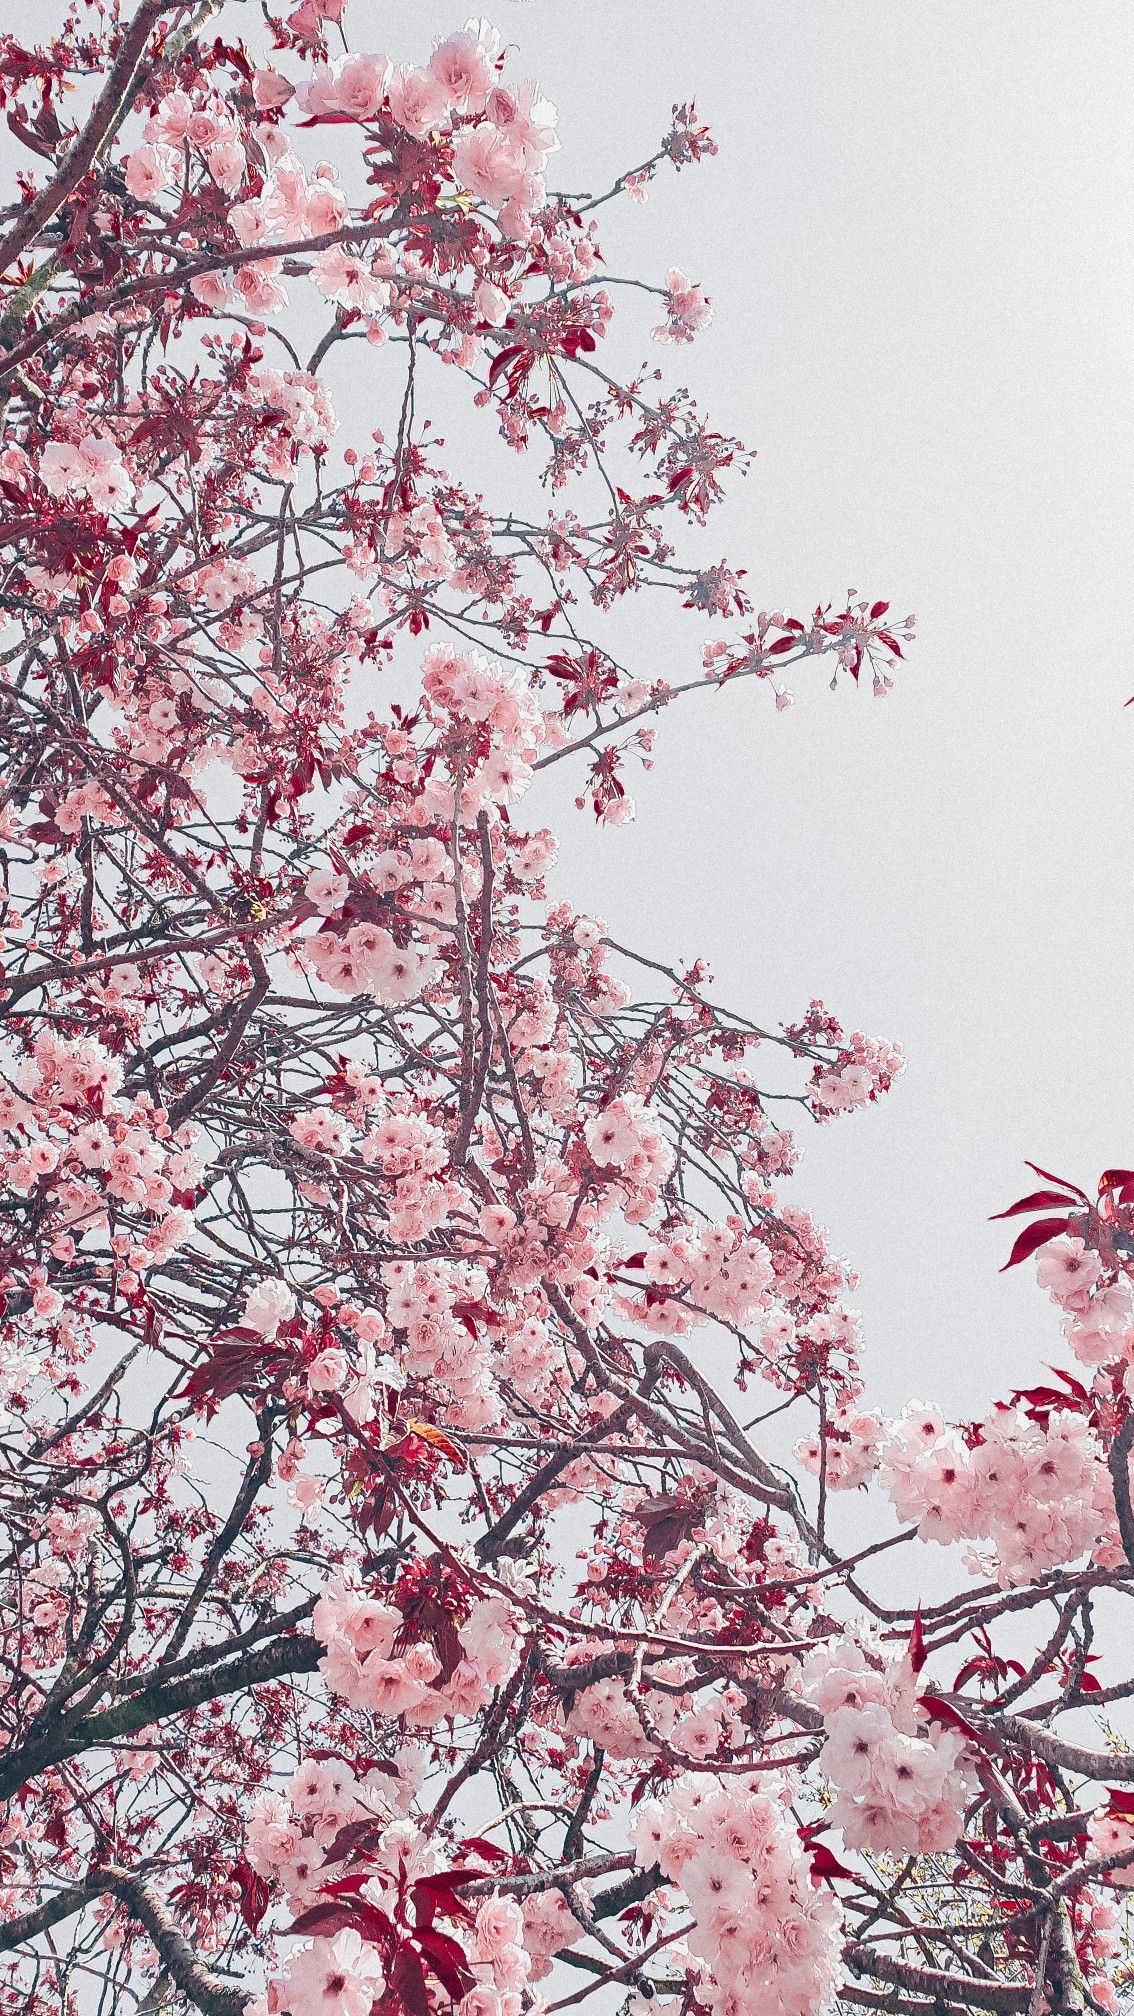 1134x2016 Cherry blossom aesthetic gray pink sakura | Cherry blossom wallpaper, Cherry blossom wallpaper iphone, Cherry blossom japa